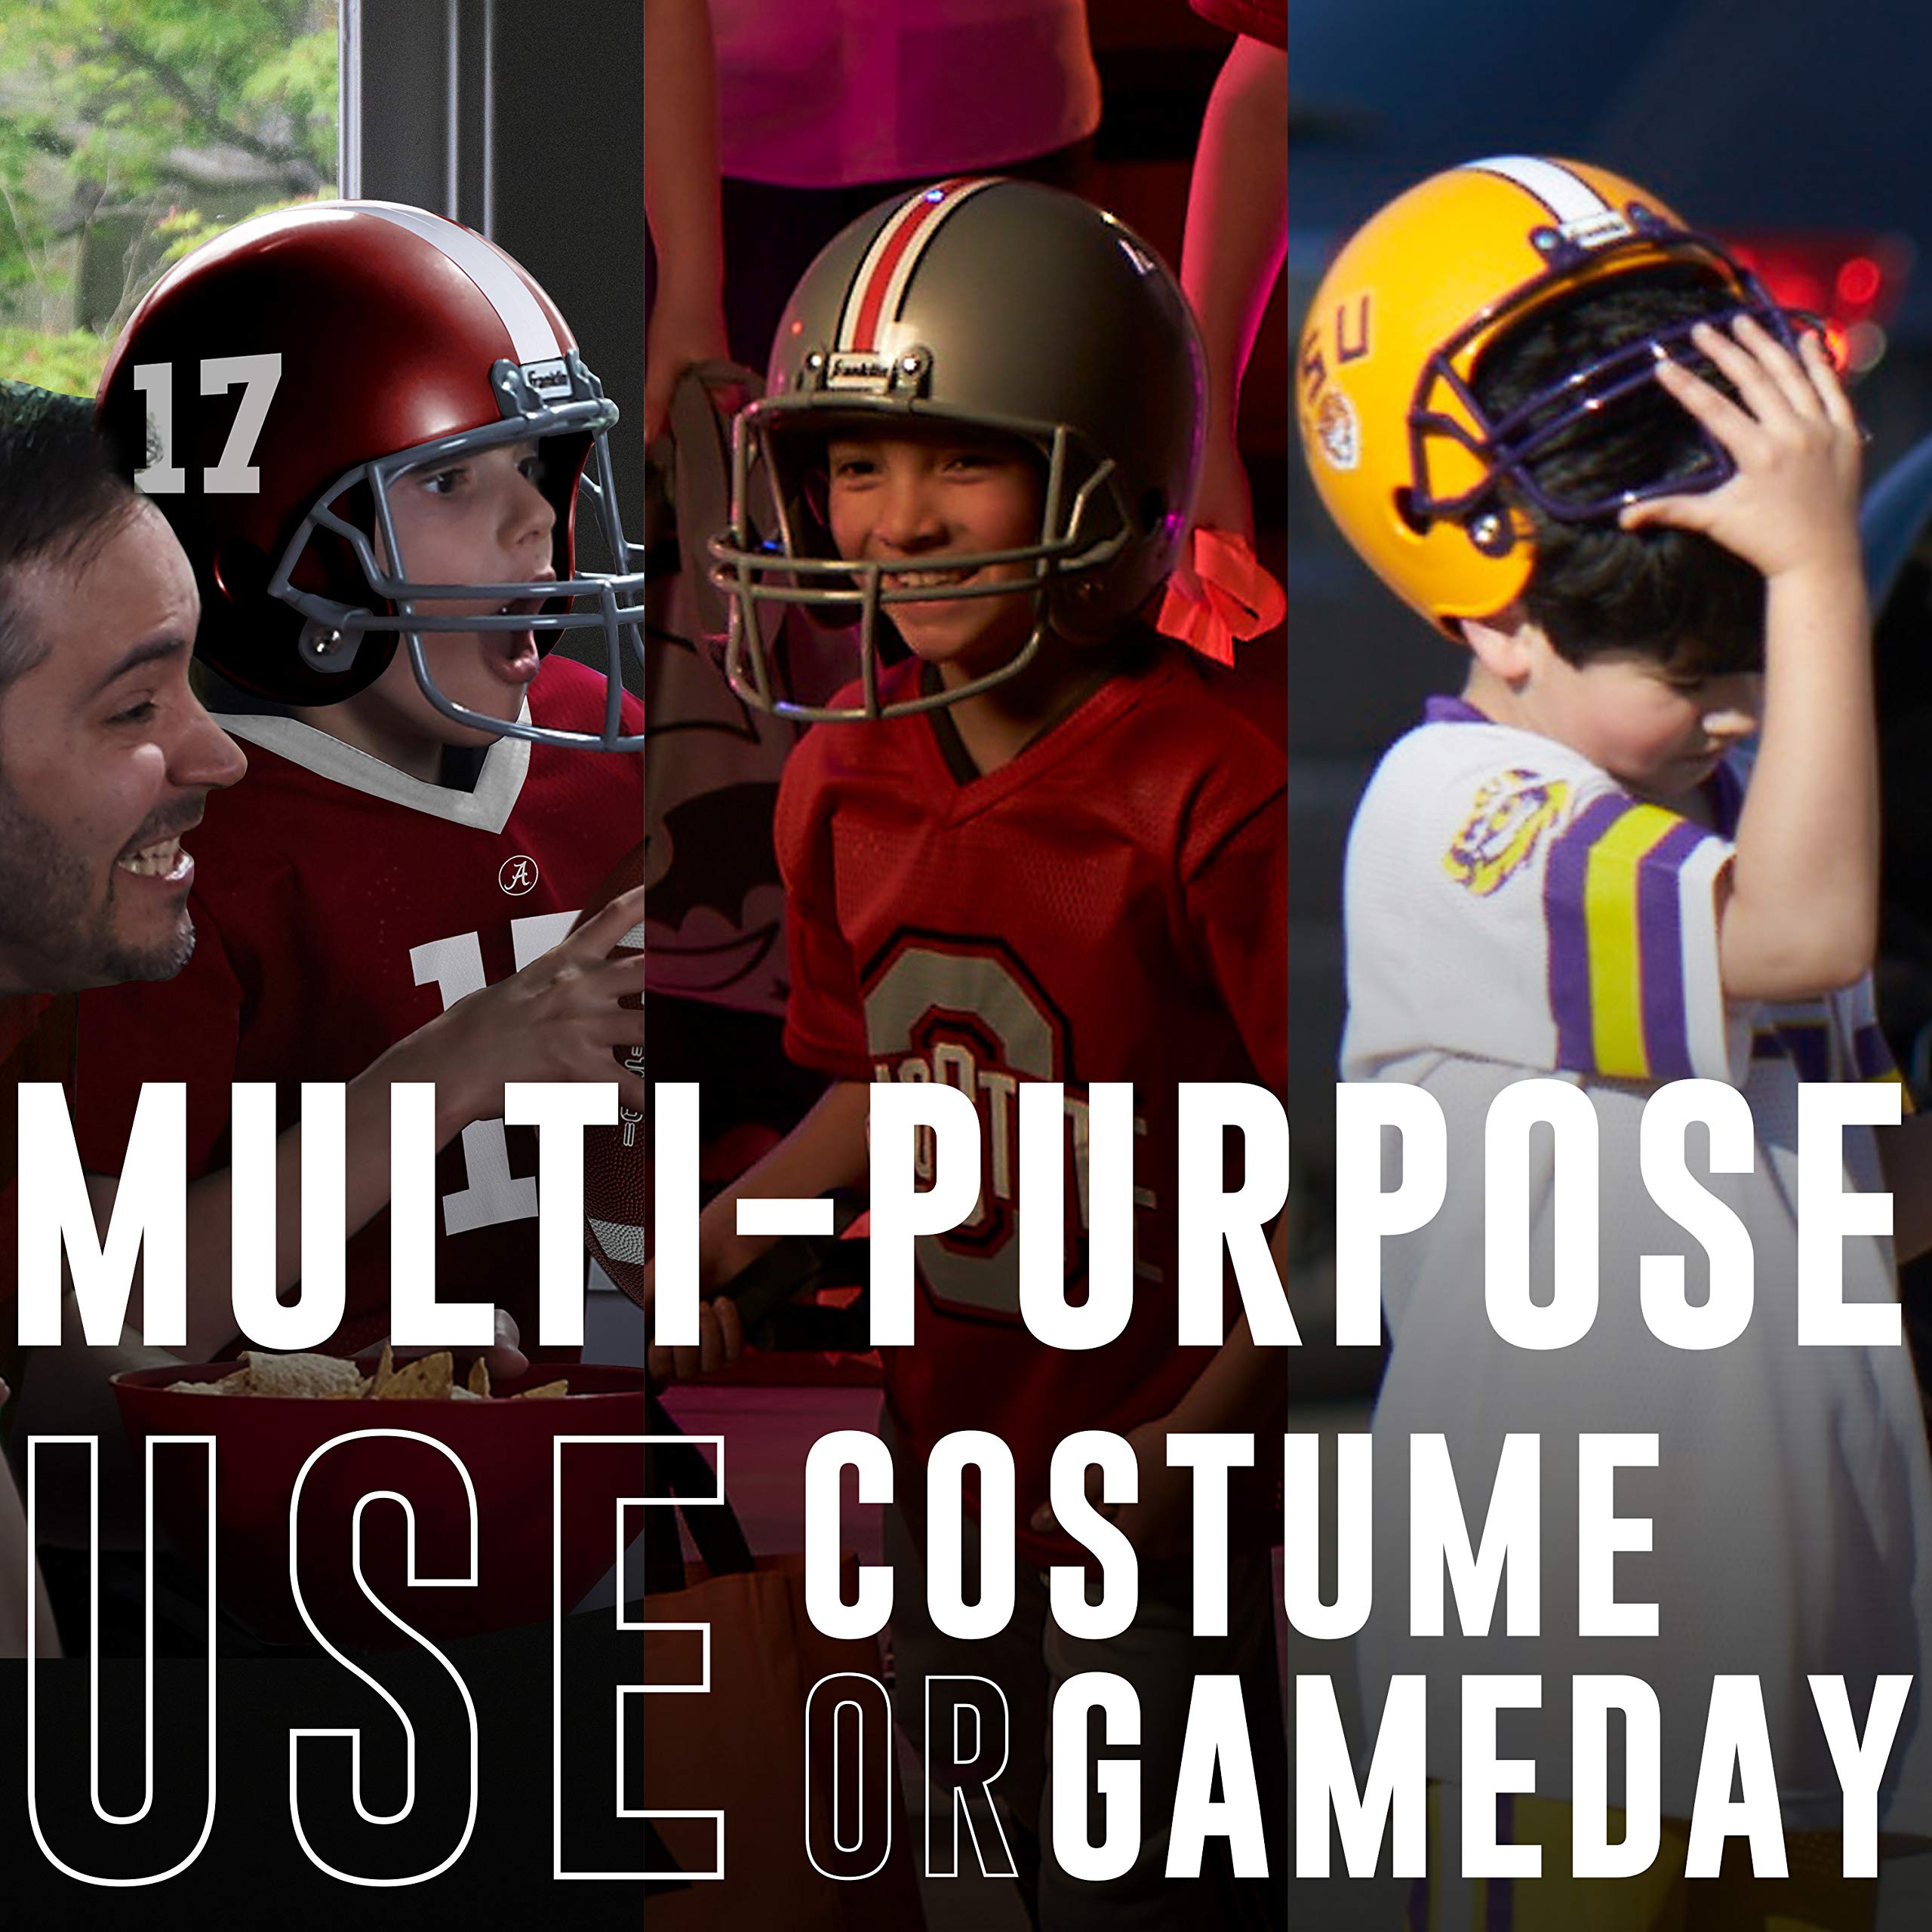 Franklin Sports NCAA Kids Football Uniform Set - NFL Youth Football Costume for Boys & Girls - Set Includes Helmet, Jersey & Pants